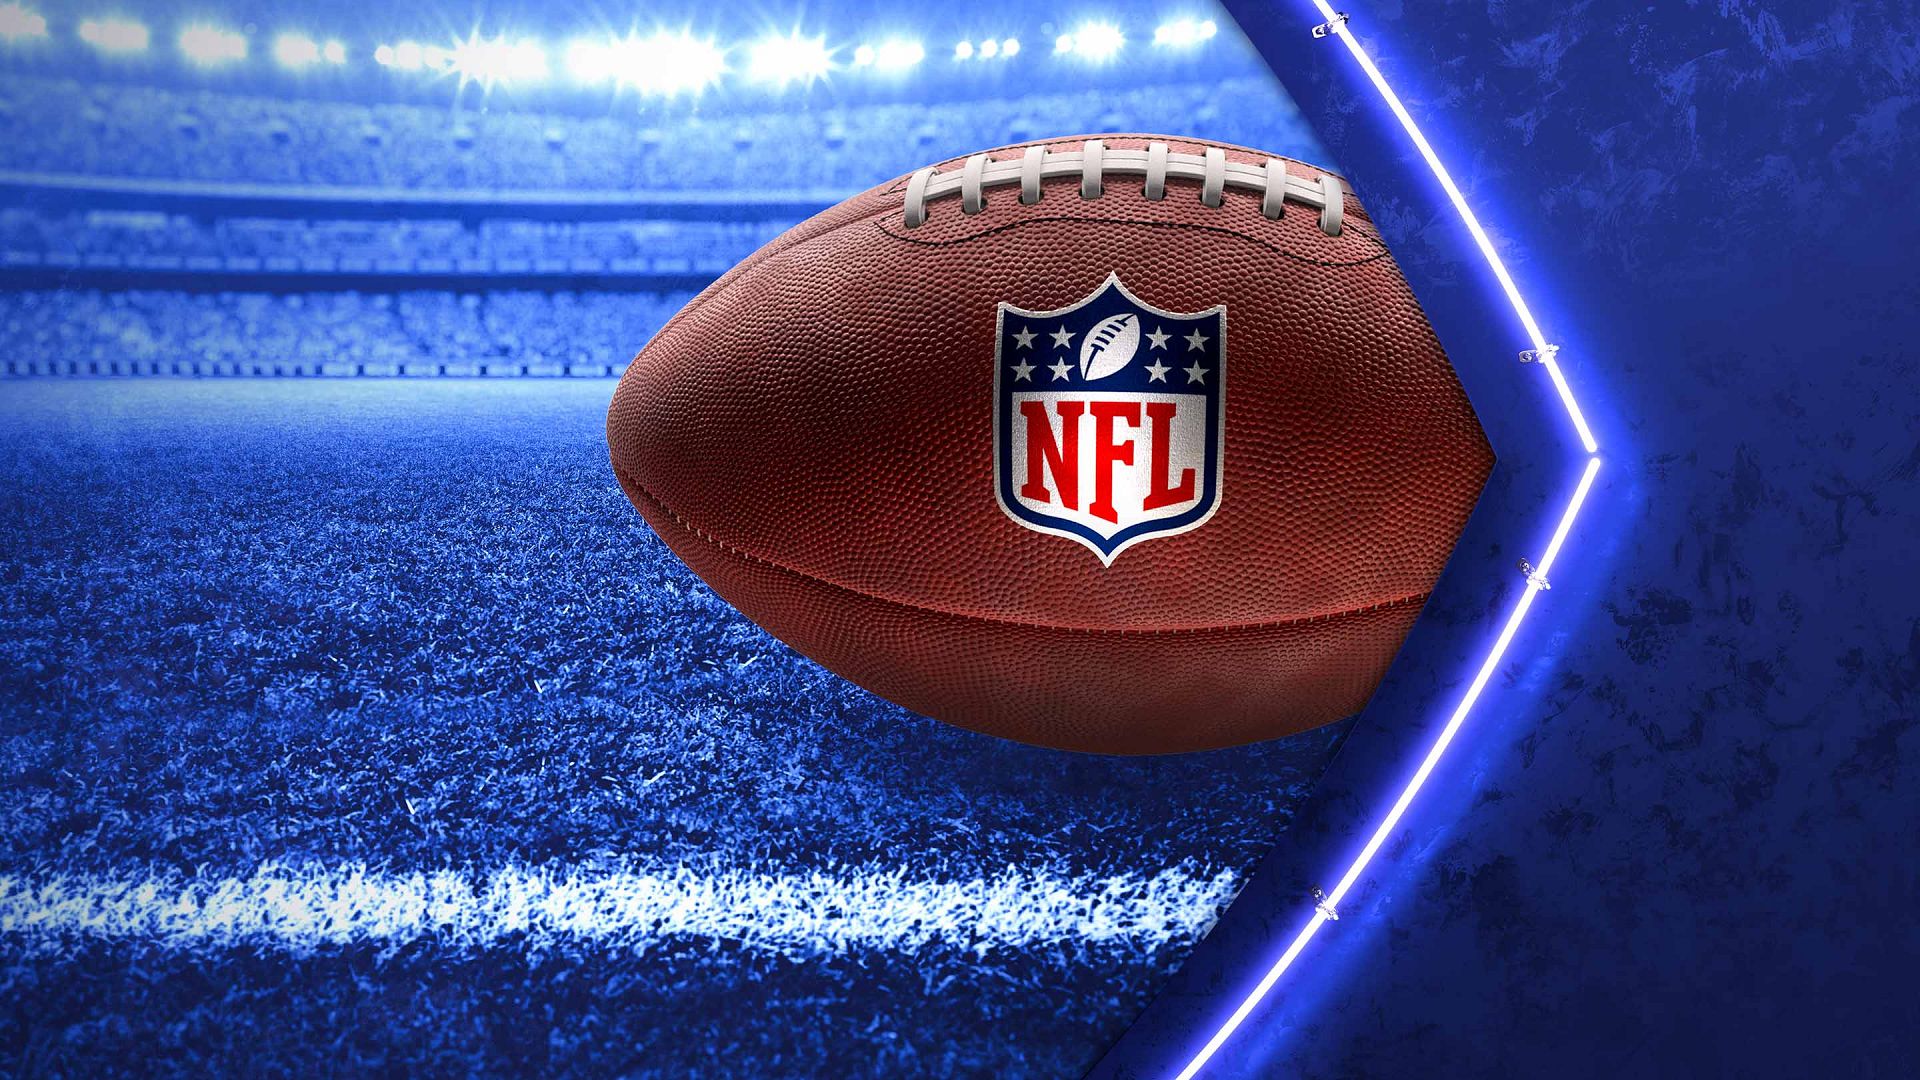 Washington Football Team vs. Dallas Cowboys: Live stream info and more